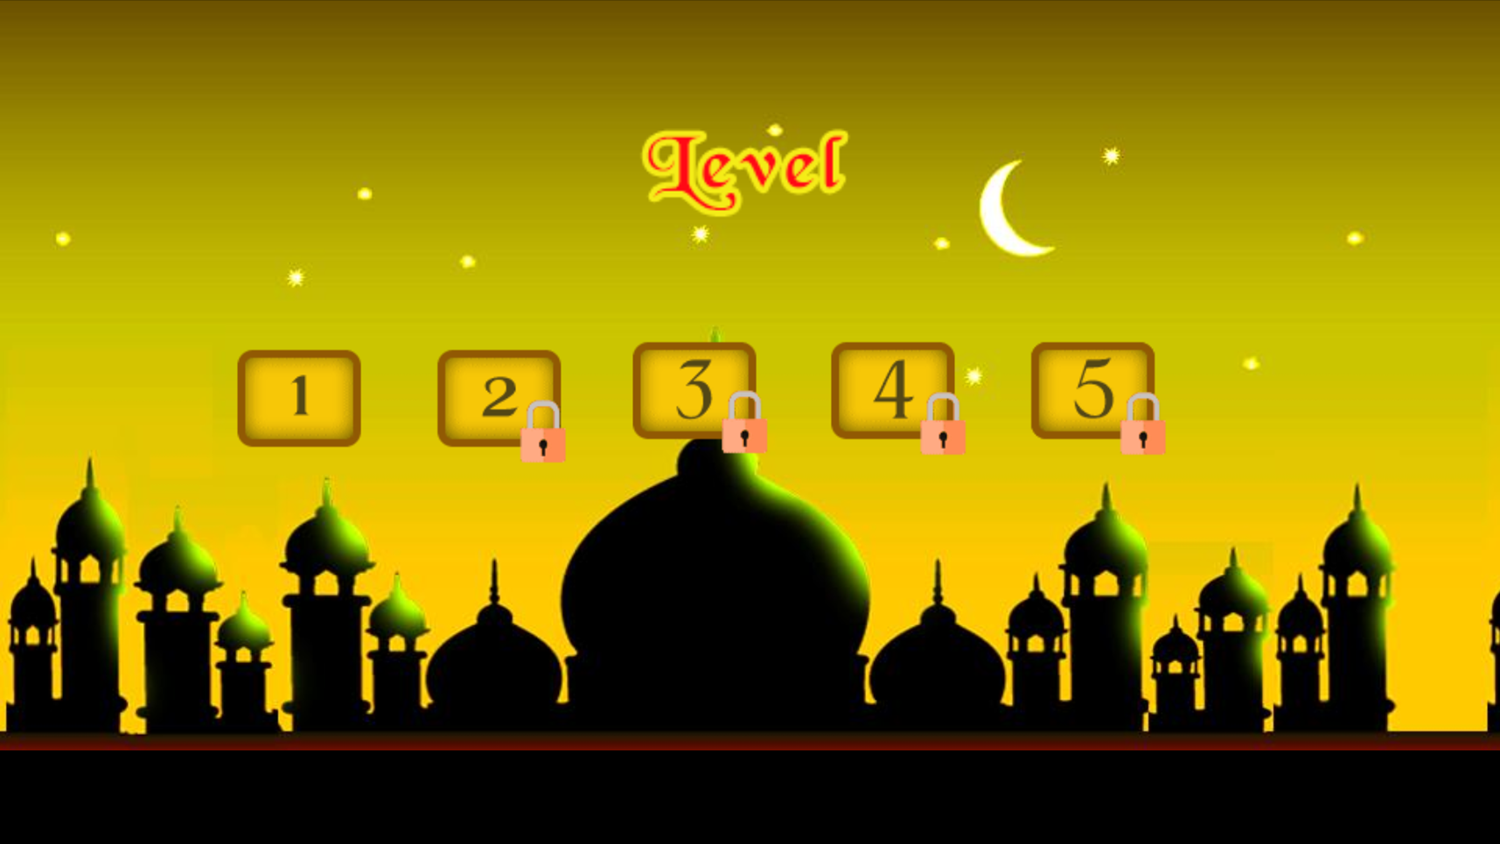 Aladdin Adventure Game Level Select Screenshot.